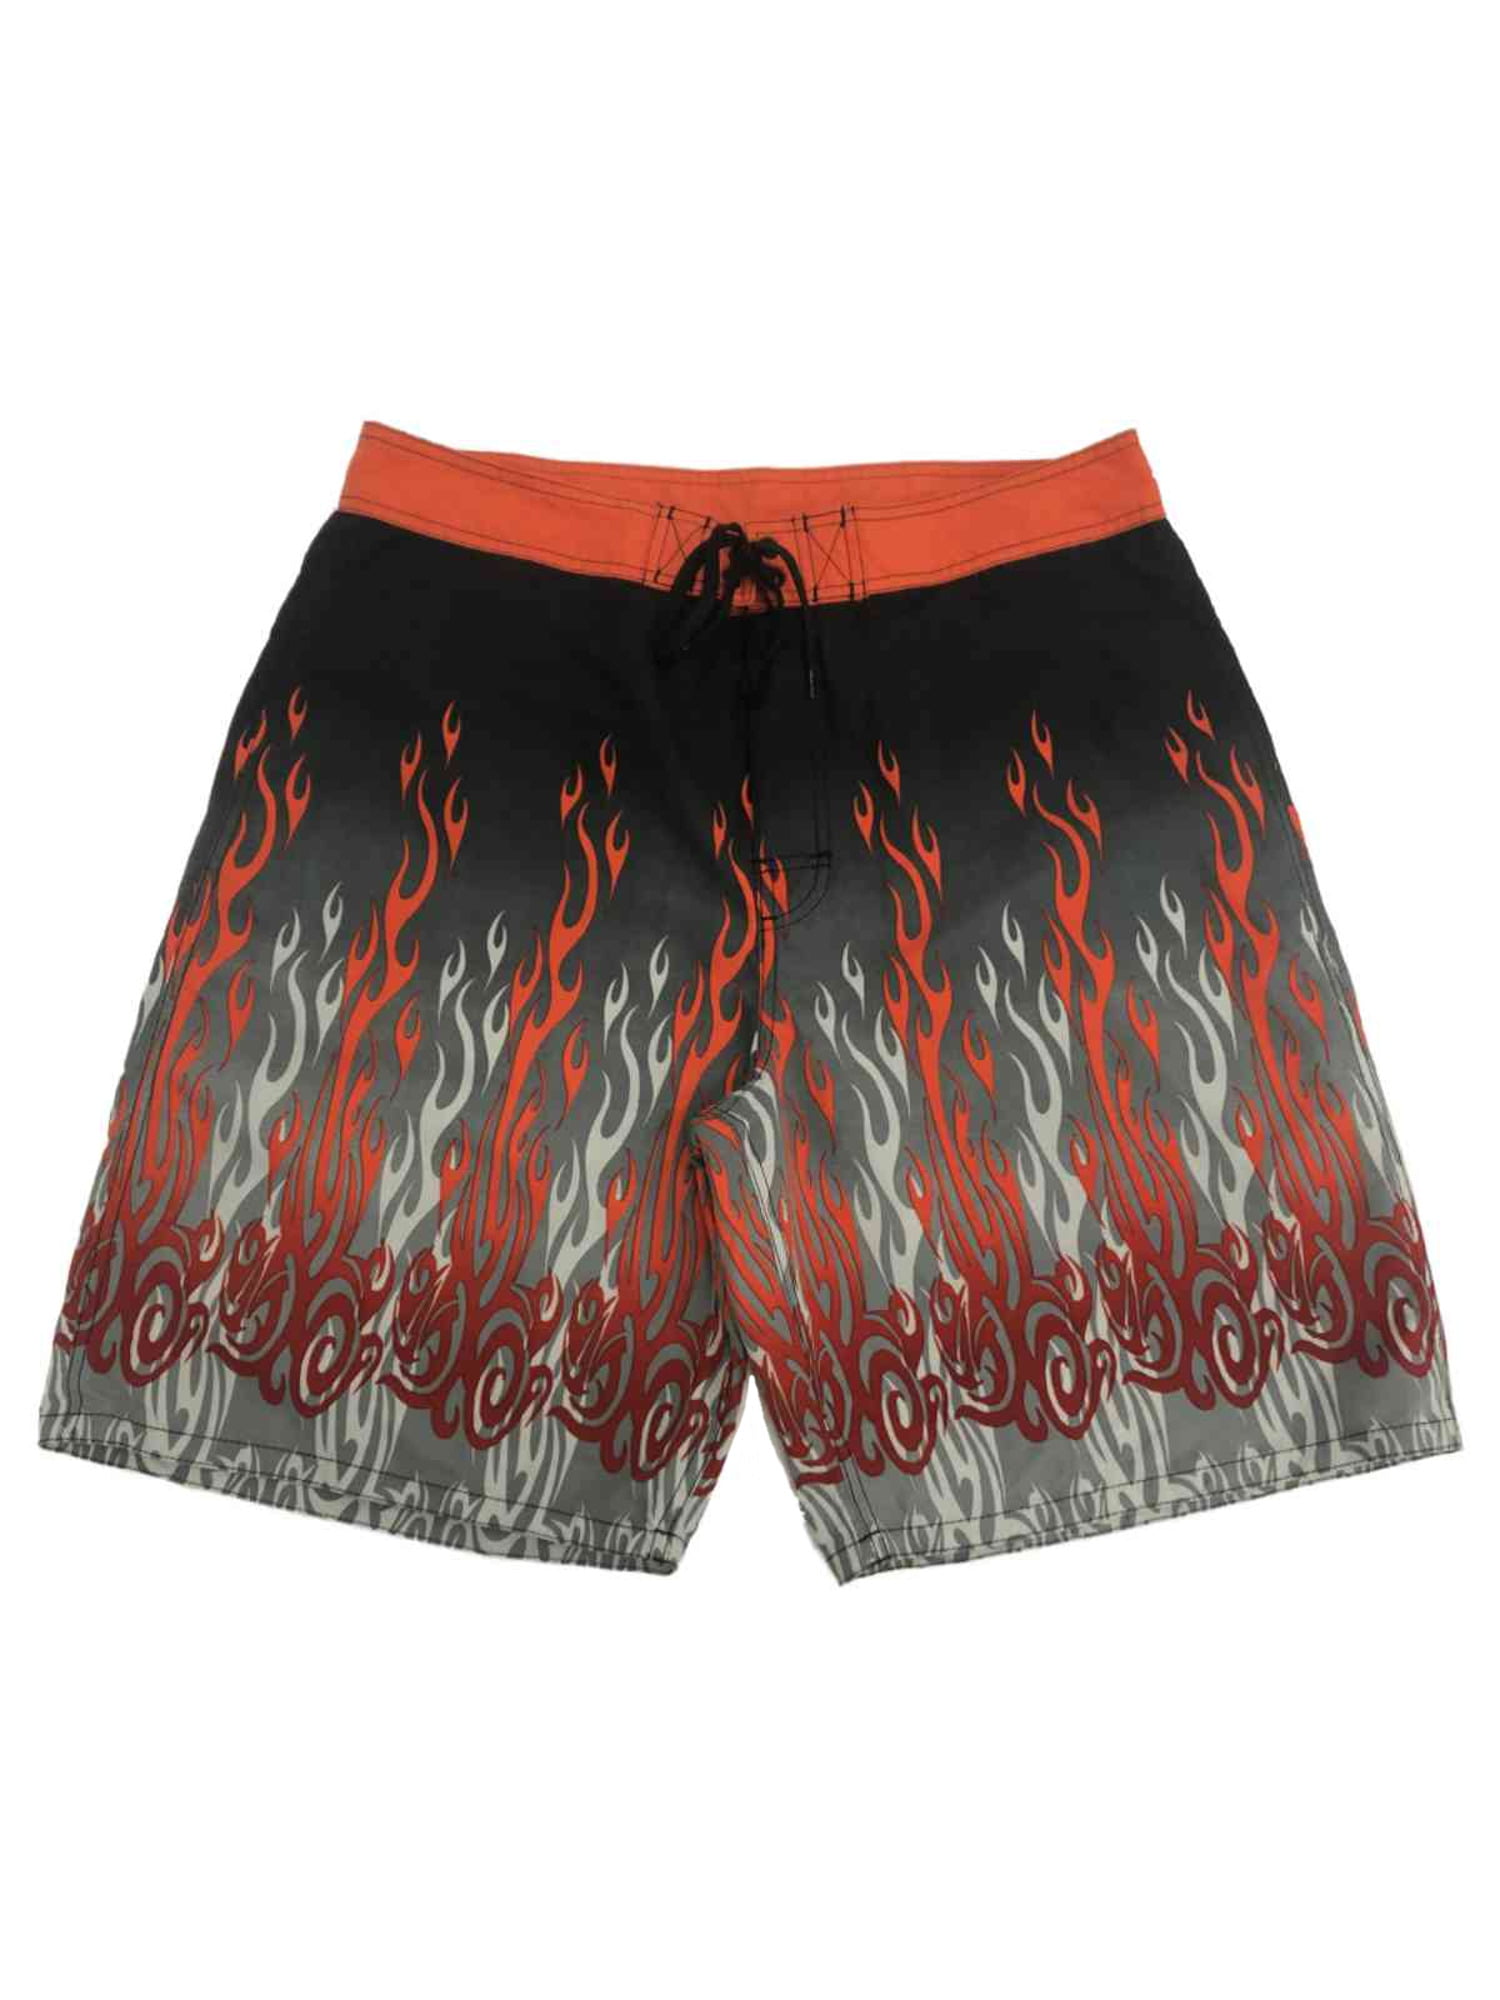 Mens Casual Swim Trunks Orange Fire Camo Red Beach Shorts with Elastic Waist 